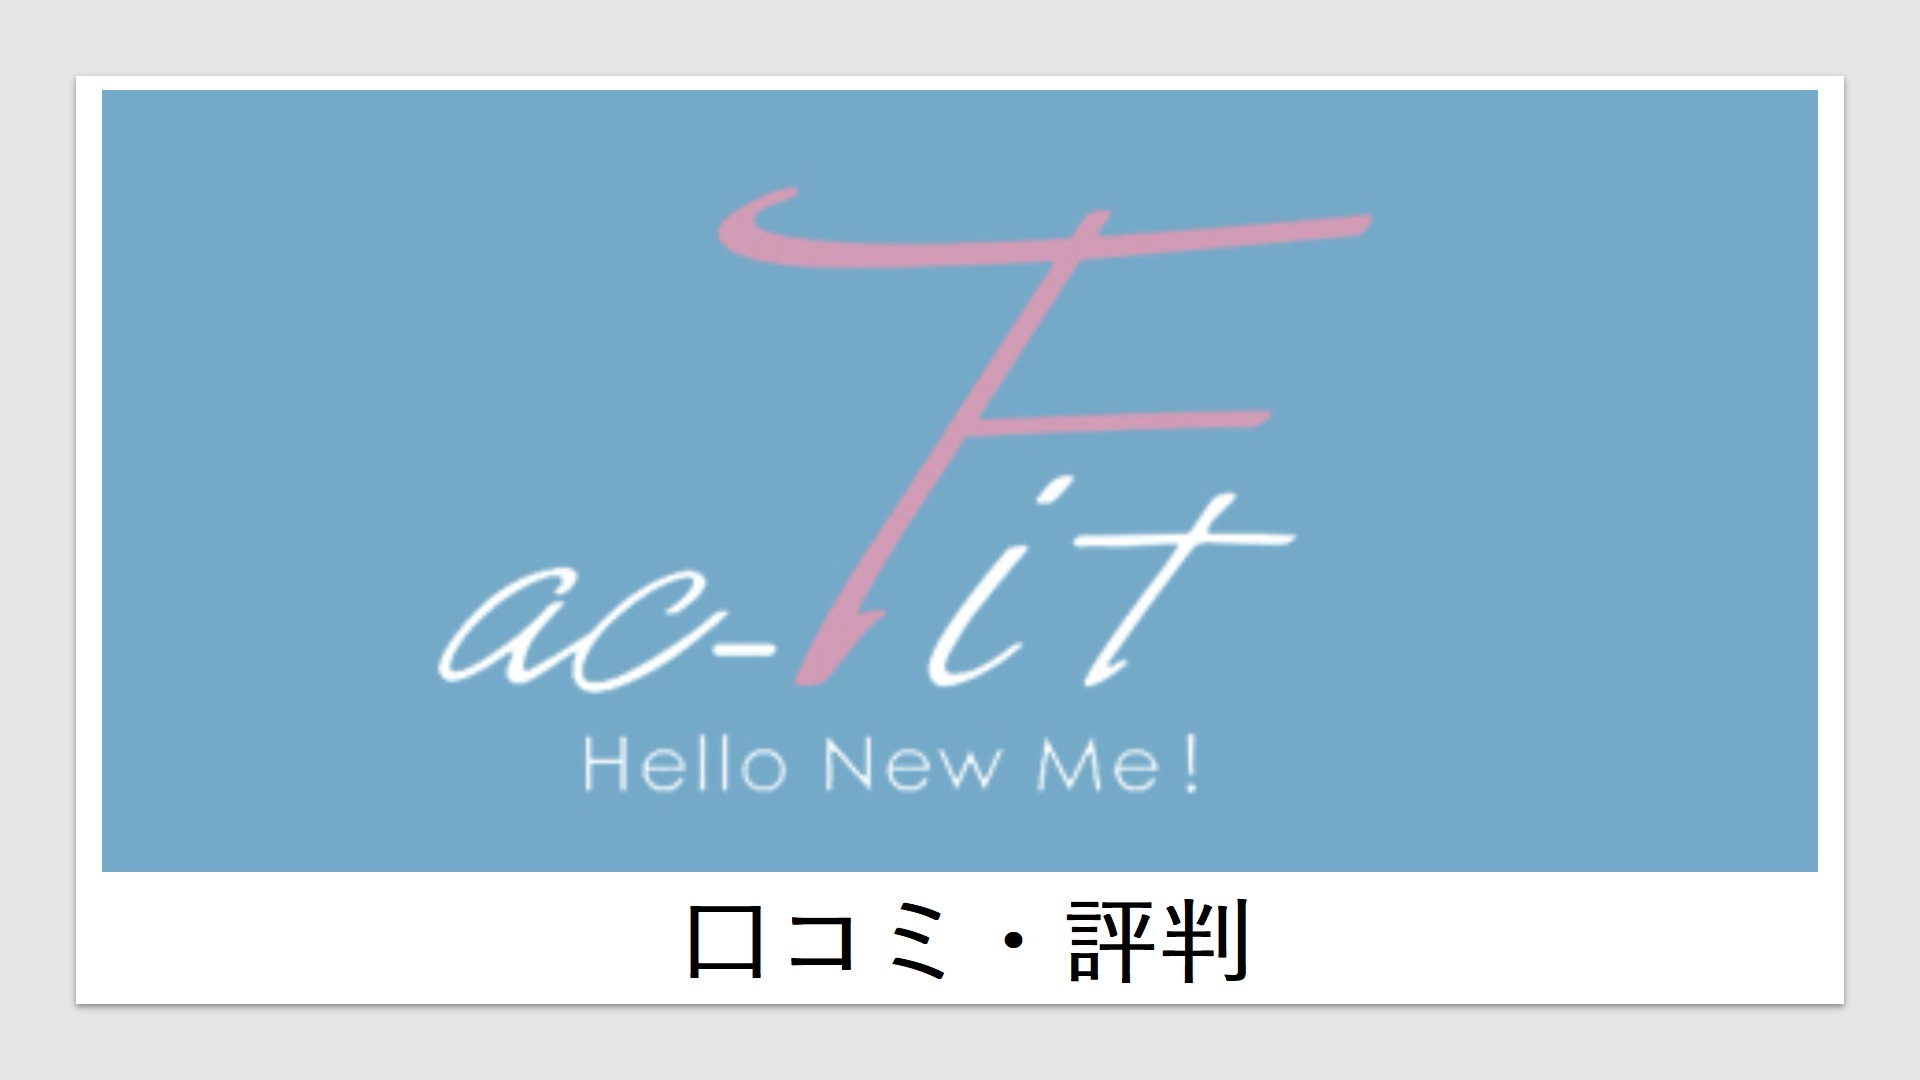 ac-fit(口コミ)